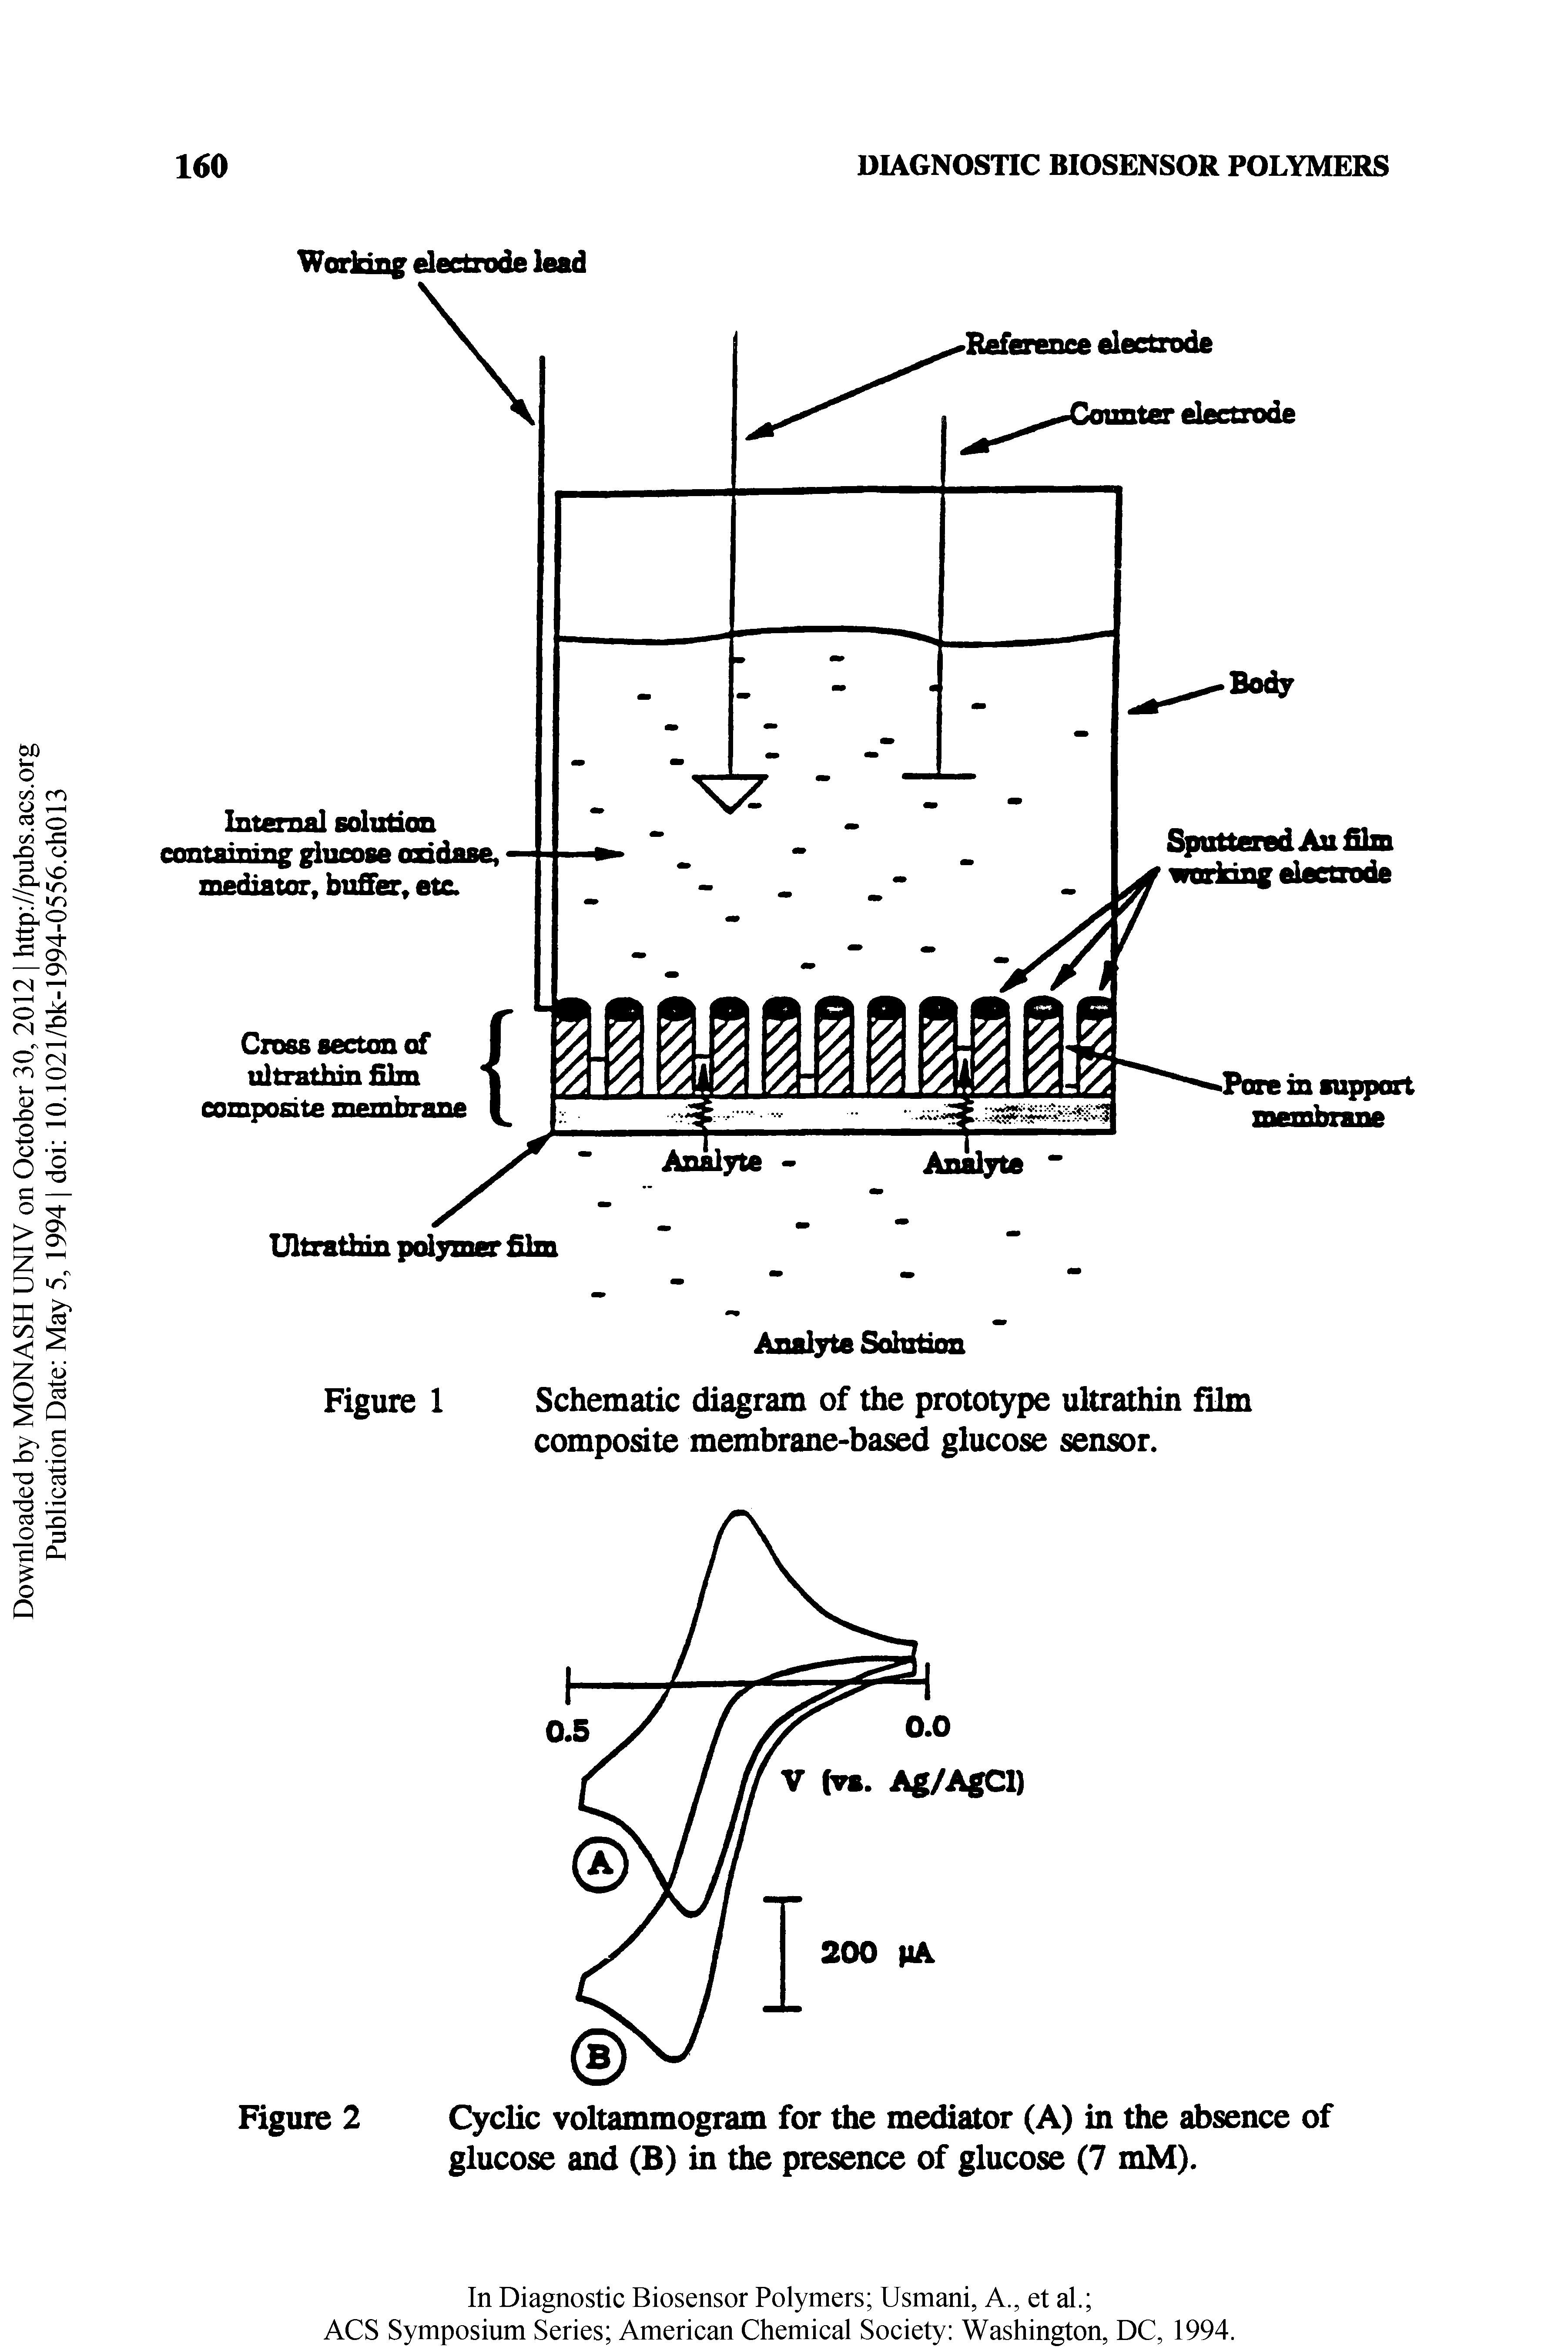 Figure 1 Schematic diagram of the prototype ultrathin film composite membrane-based glucose sensor.